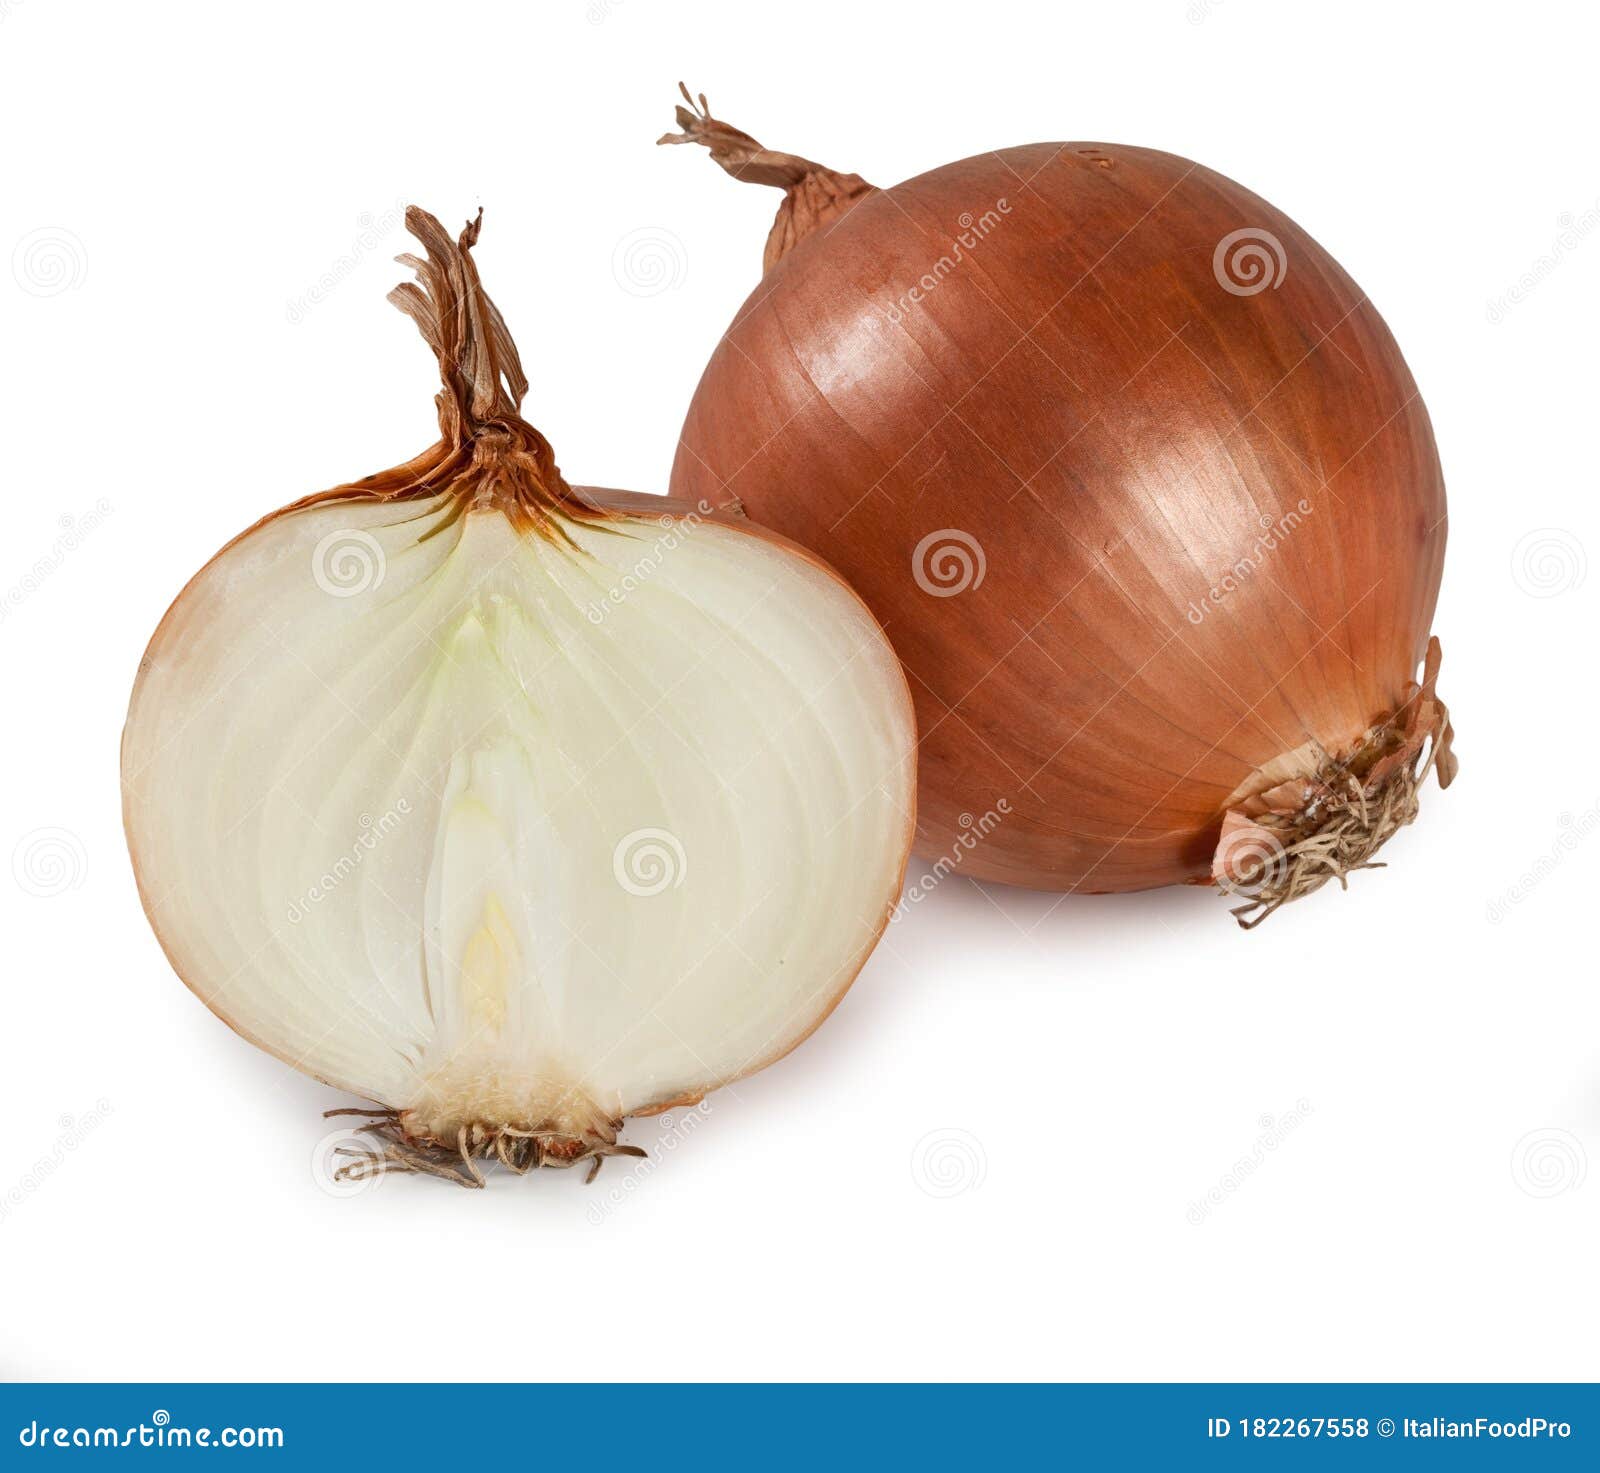 onion - `cipolla`  on white